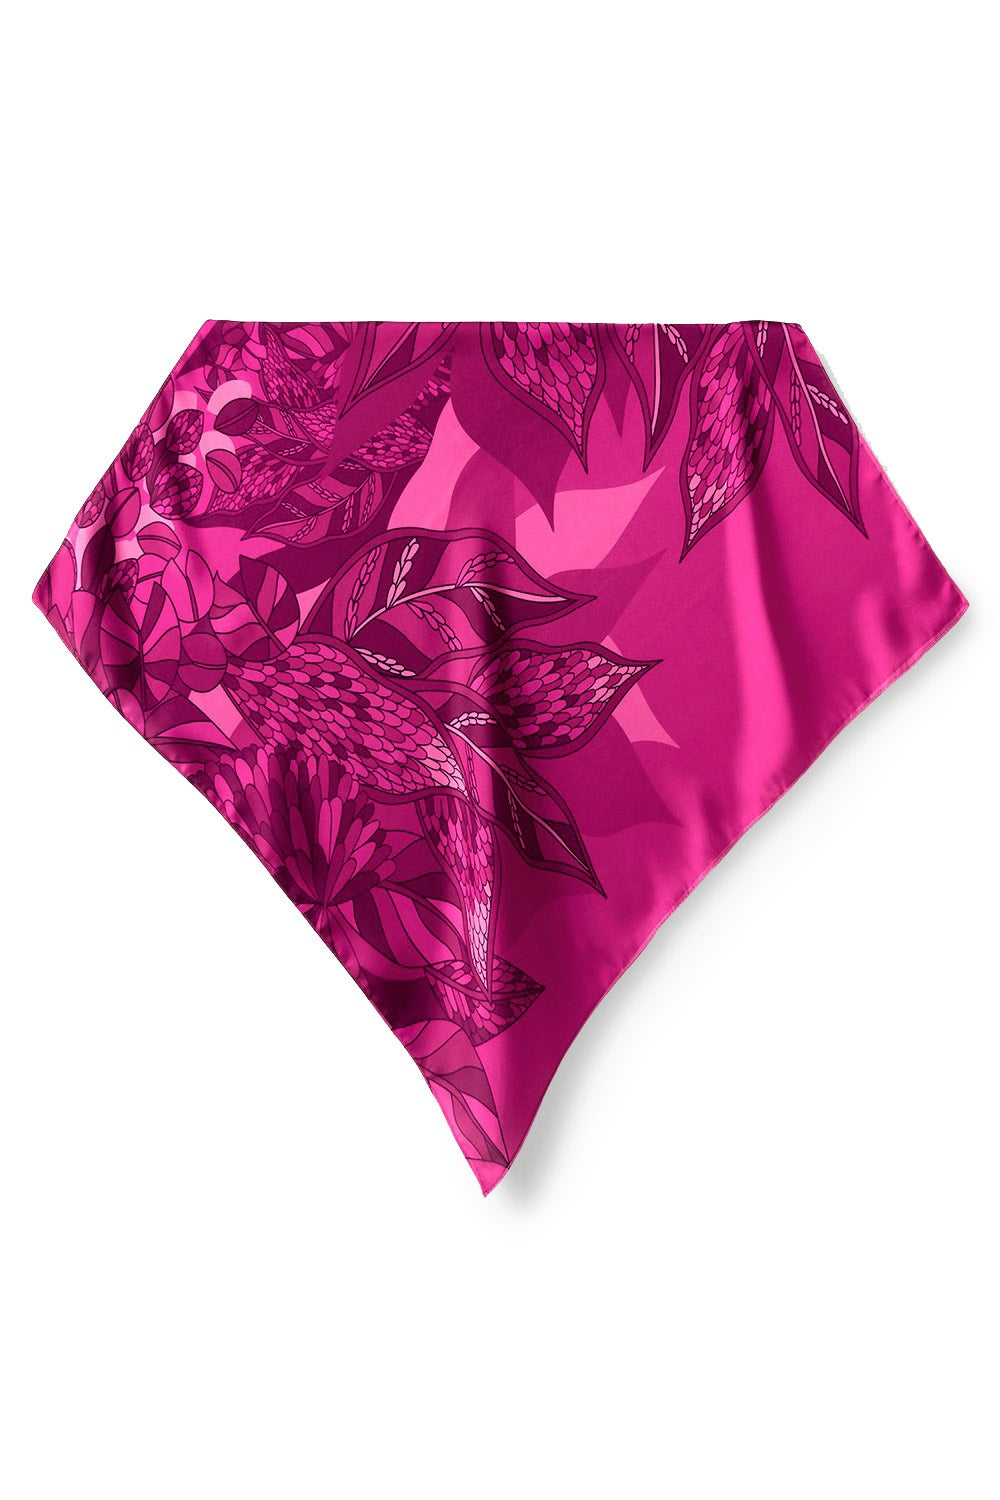 Lenço Ramos de Púrpura pink em cetim poliéster | 50x50cm